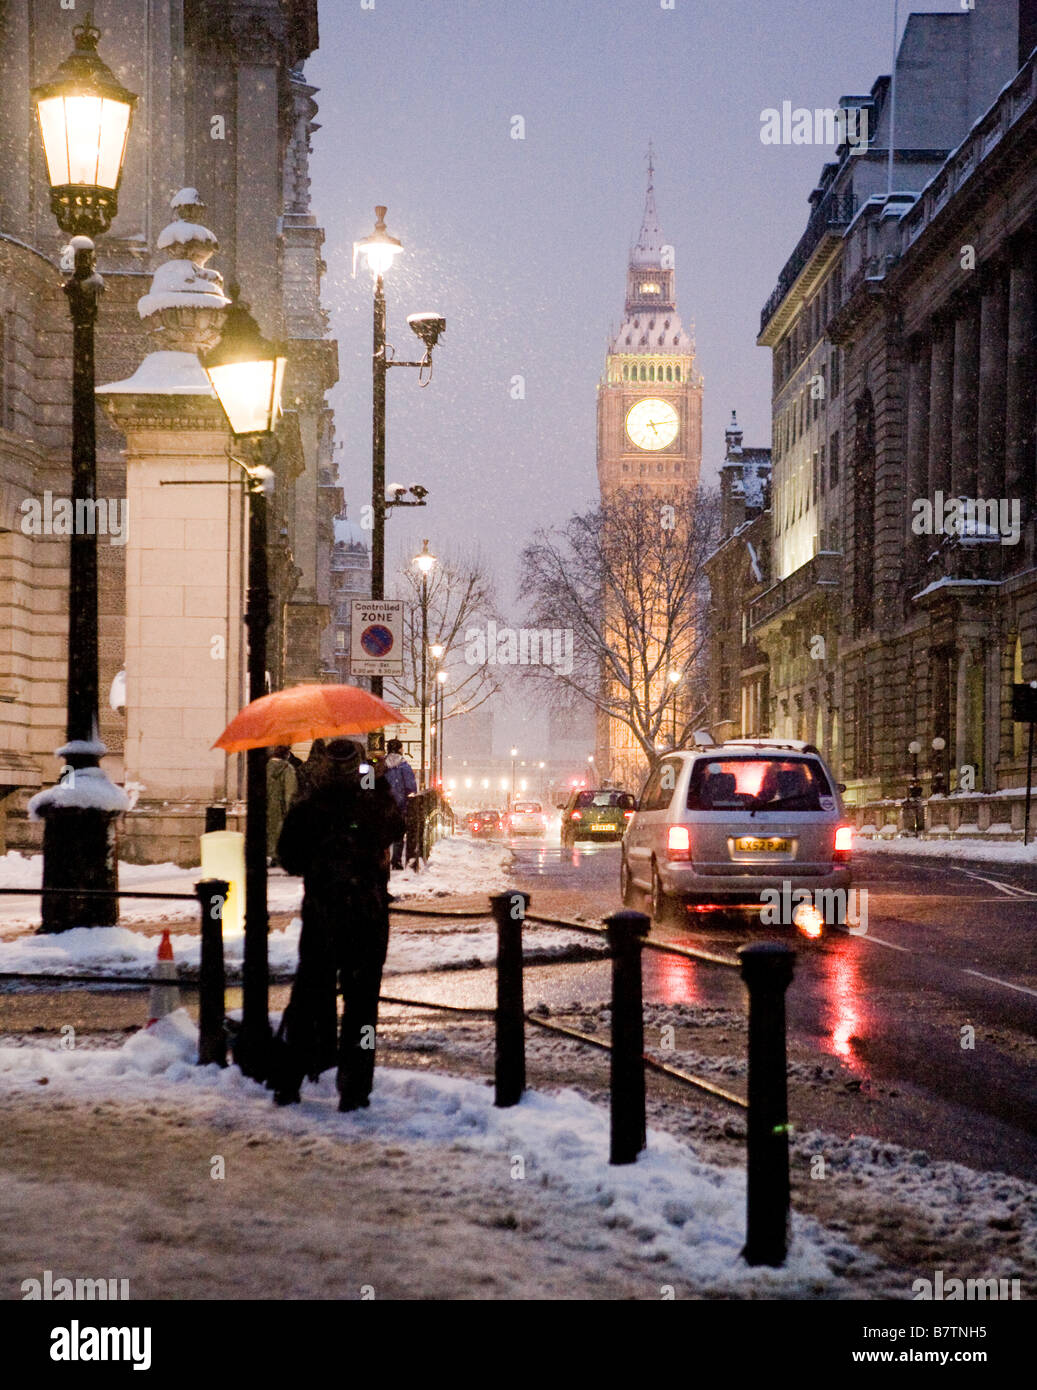 Snow at the Corner Of birdcage Walk With Big Ben London UK Europe Stock Photo